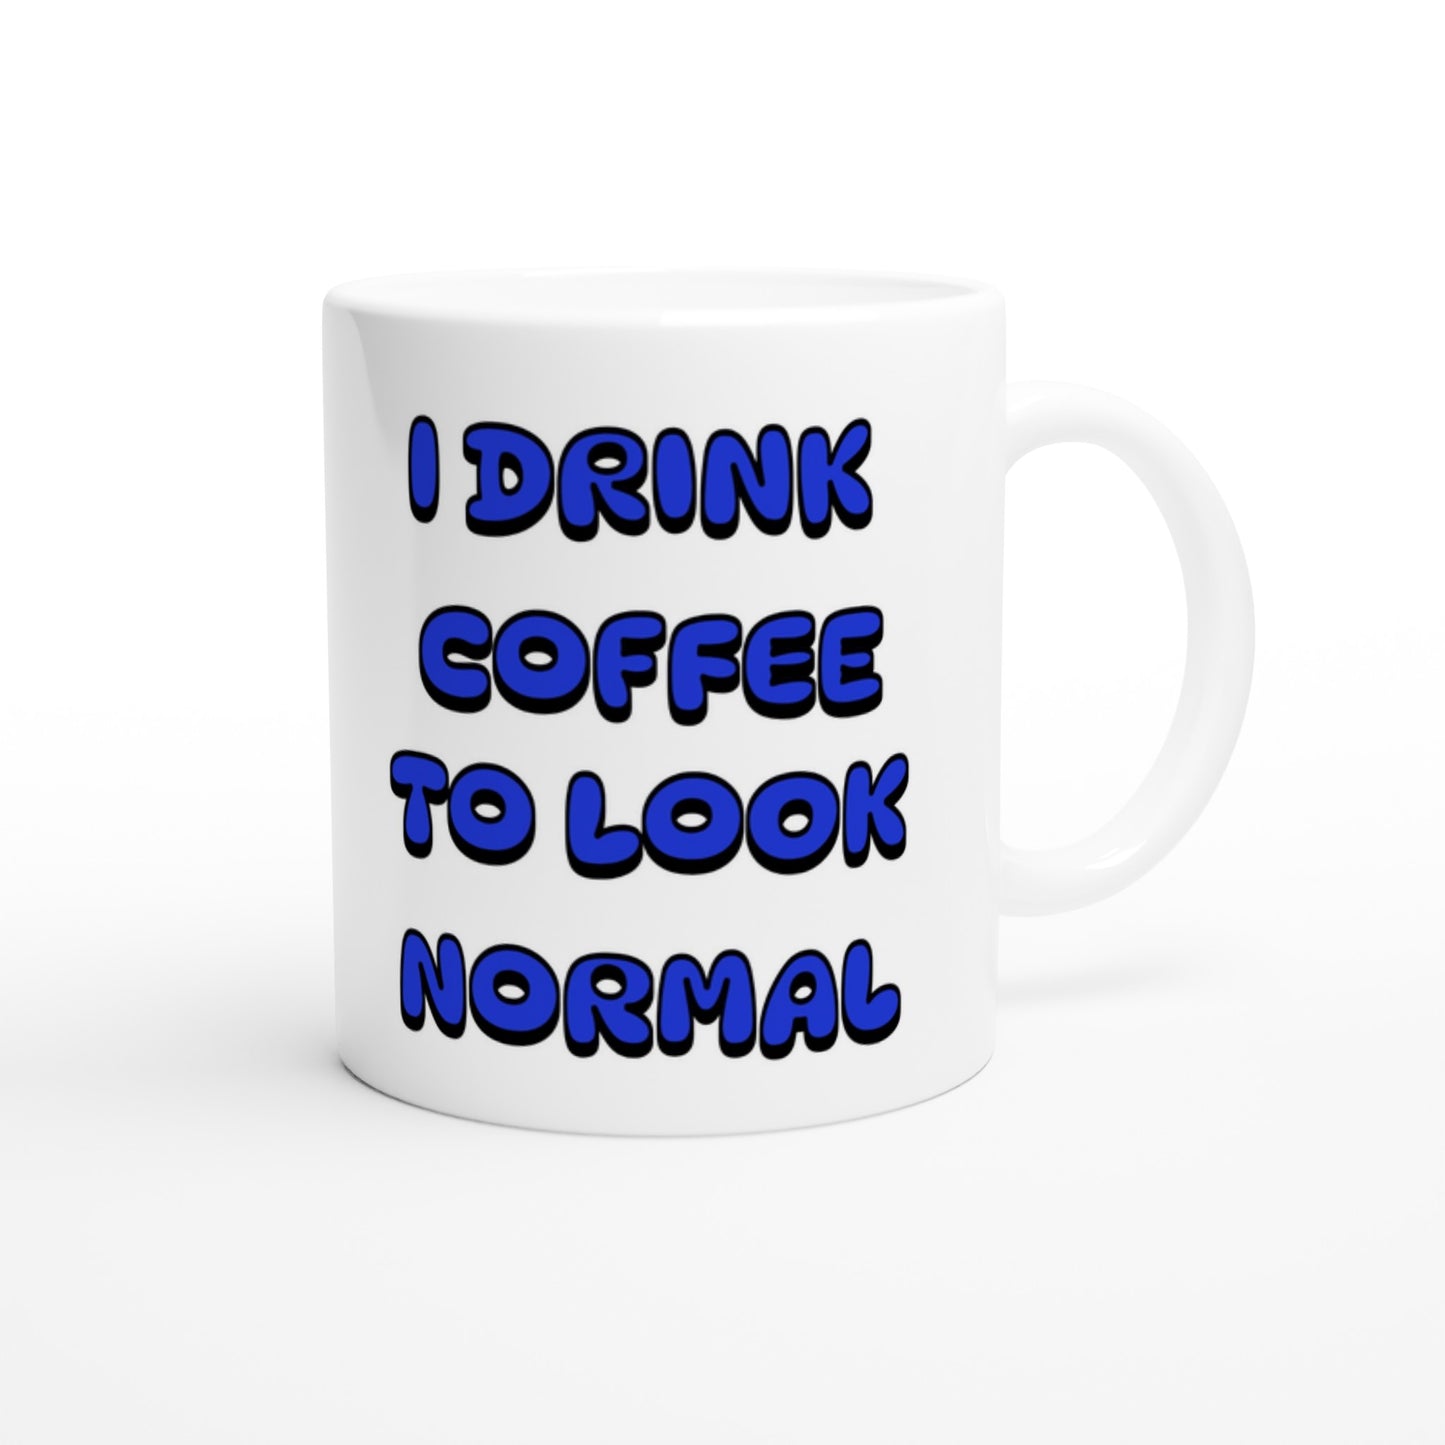 To Look Normal White 11oz Ceramic Mug by Java Good Coffee